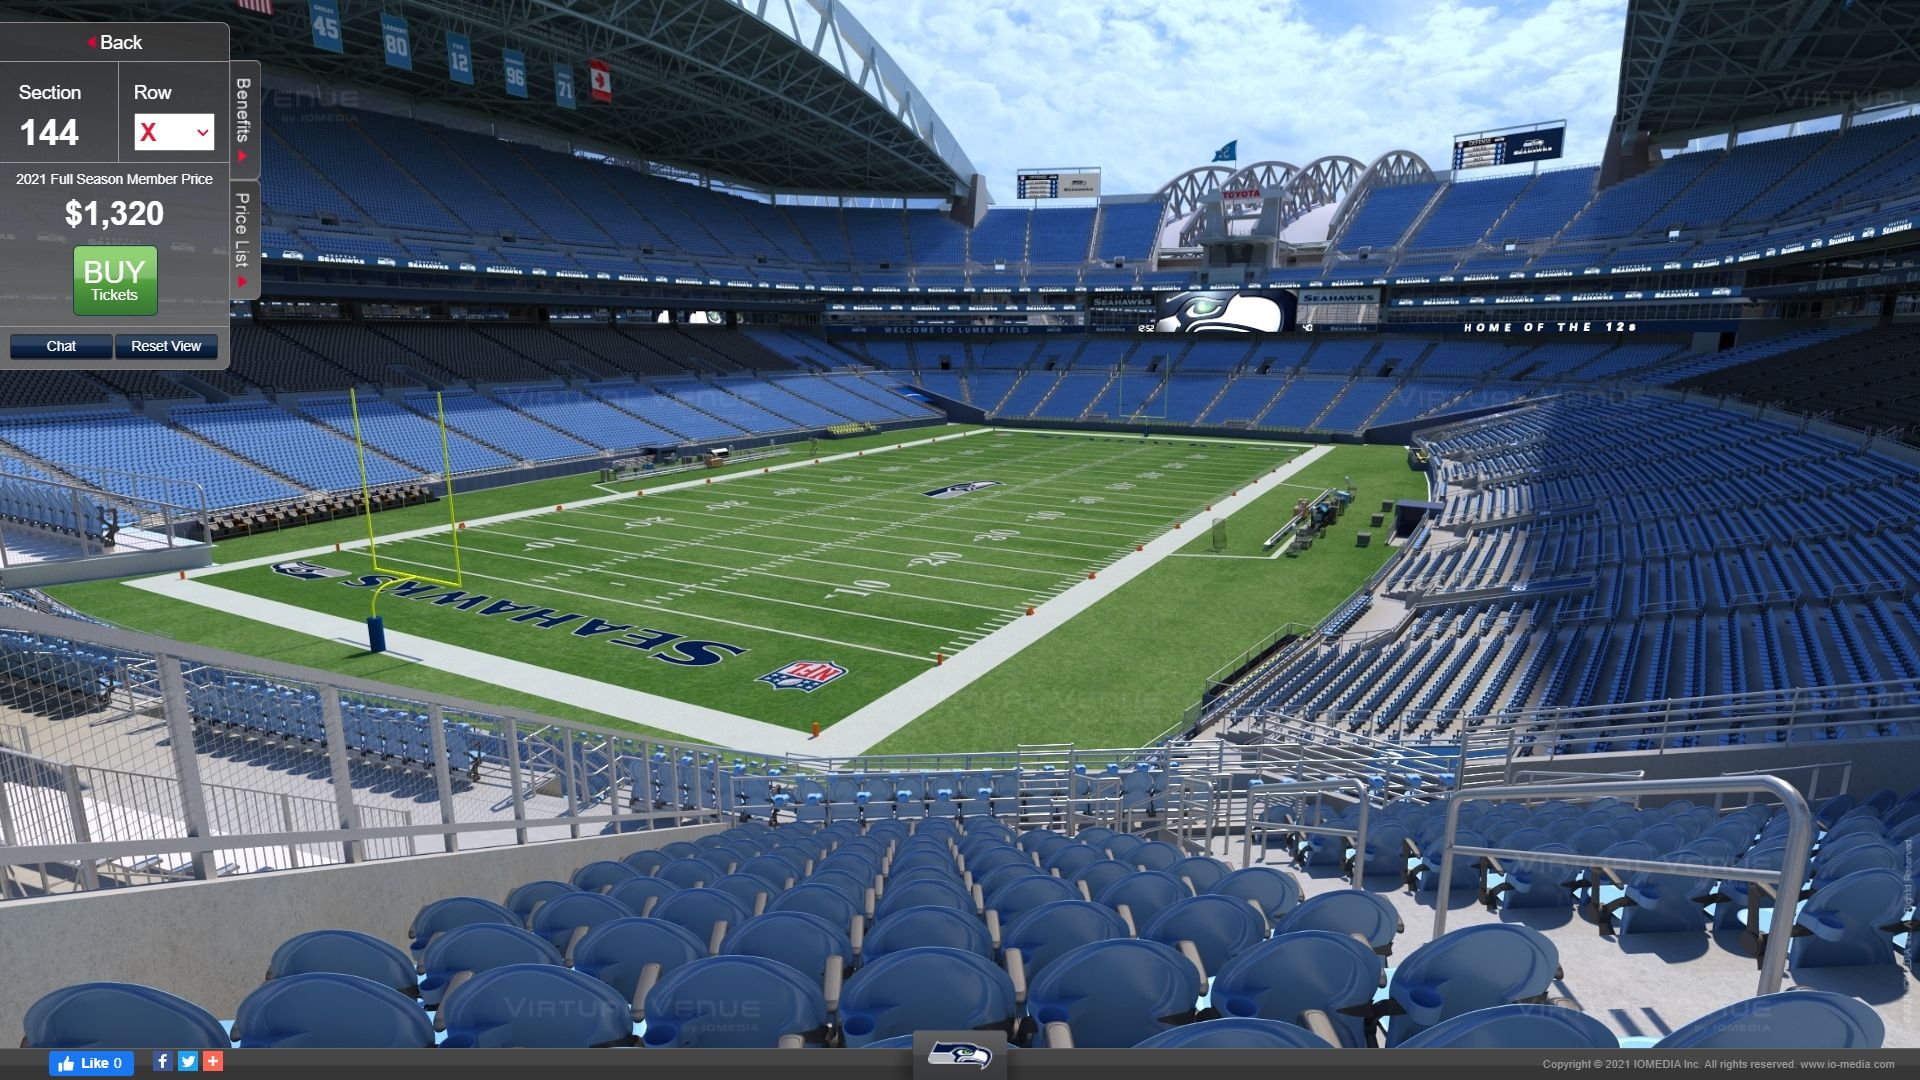 Jaguars VS Seahawks Tickets! Lower Level - Great aisle Seats 1&2! - $80